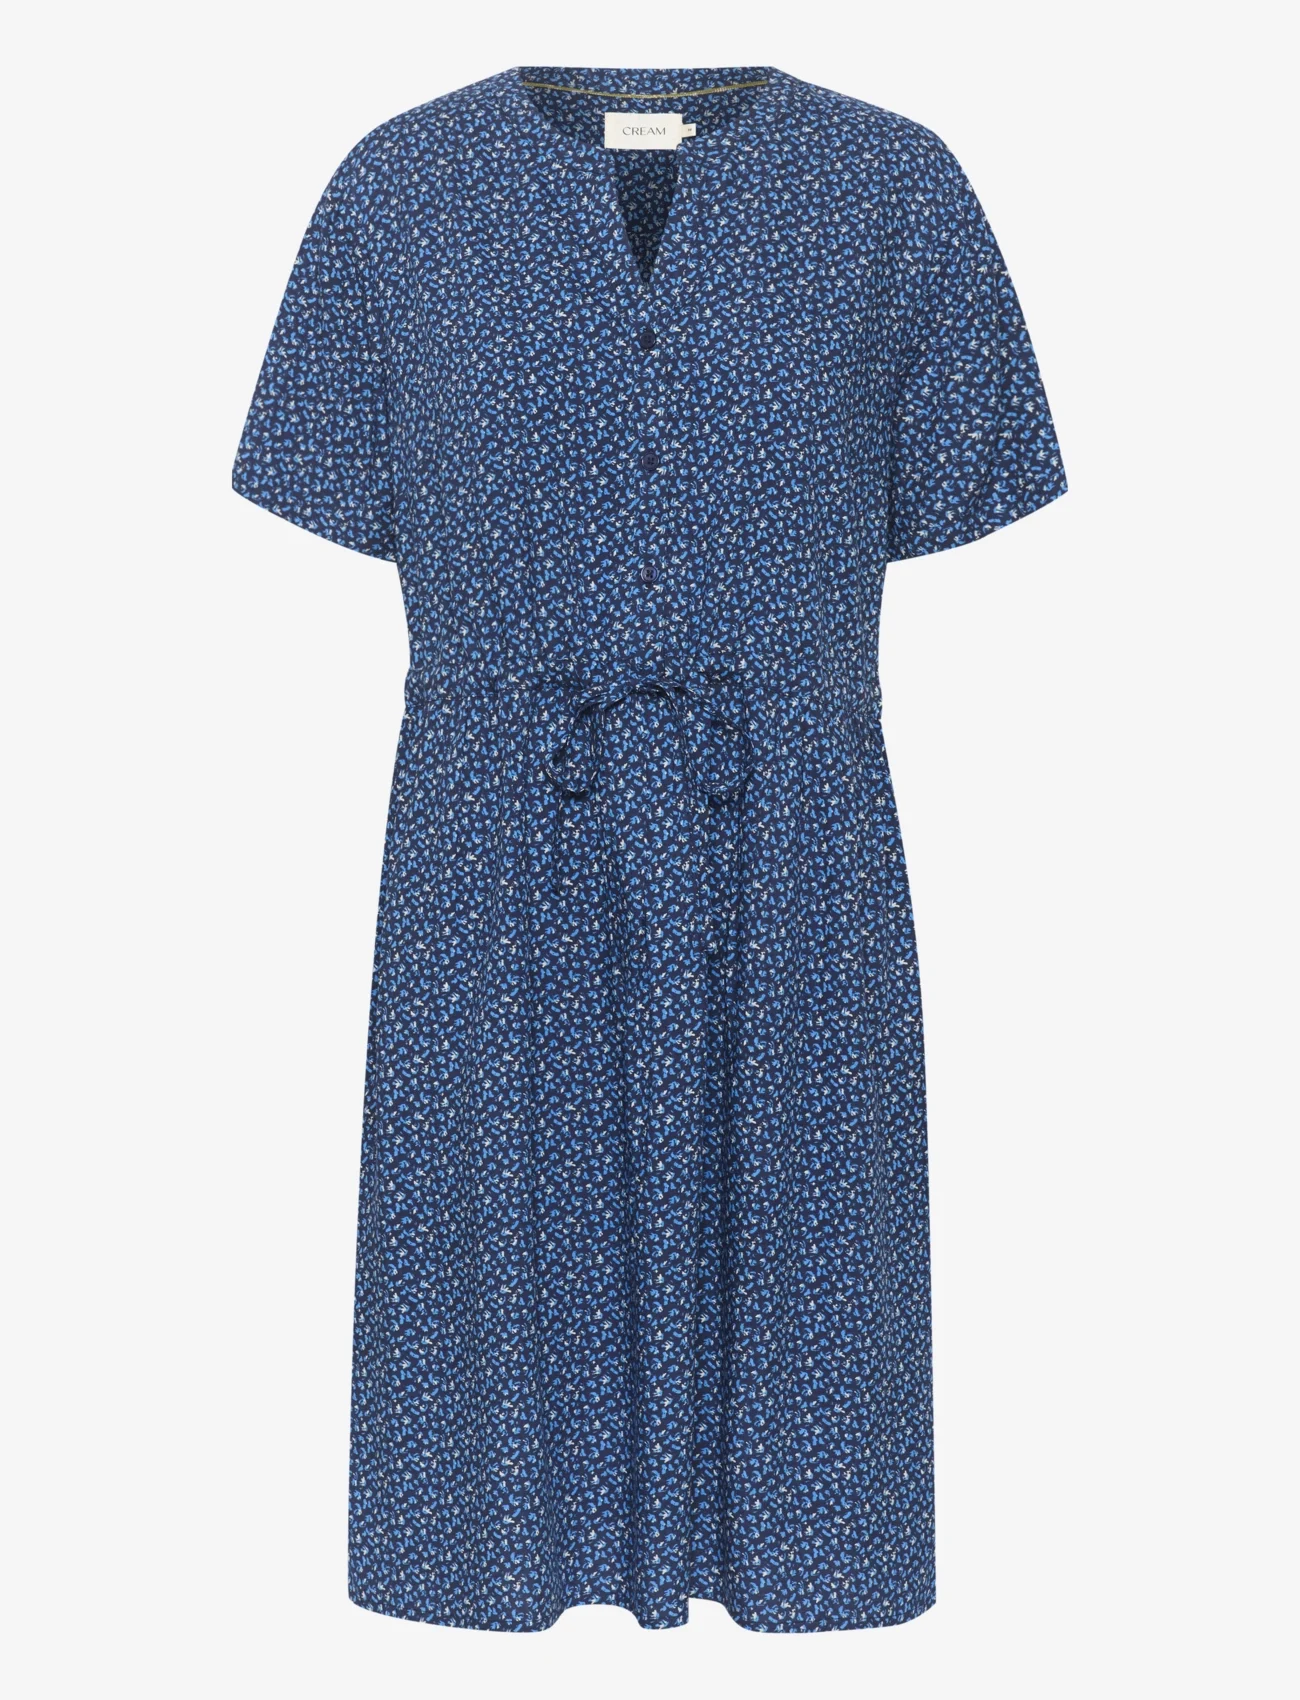 Cream - CRTiah Dress - Zally Fit - summer dresses - animal skin blue - 0